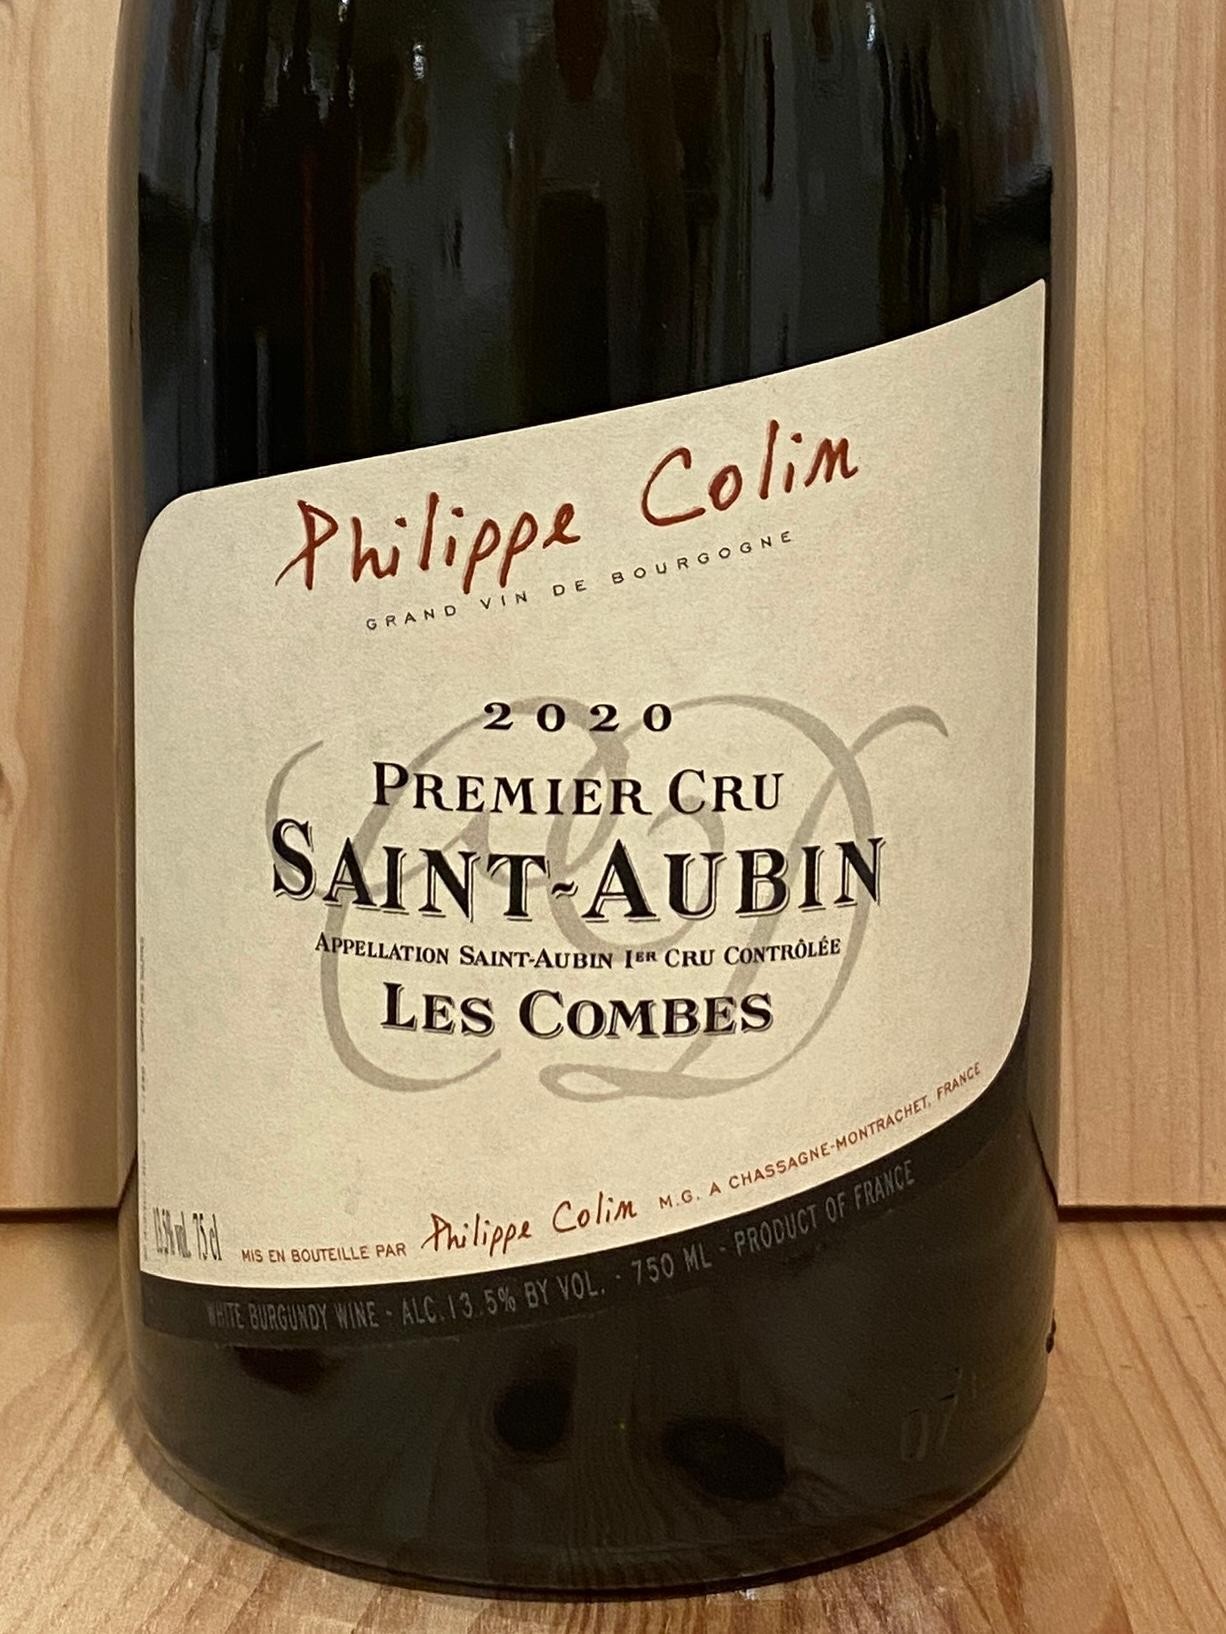 Philippe Colin 1er Cru "Les Combes" 2020: Saint-Aubin, Burgundy, France